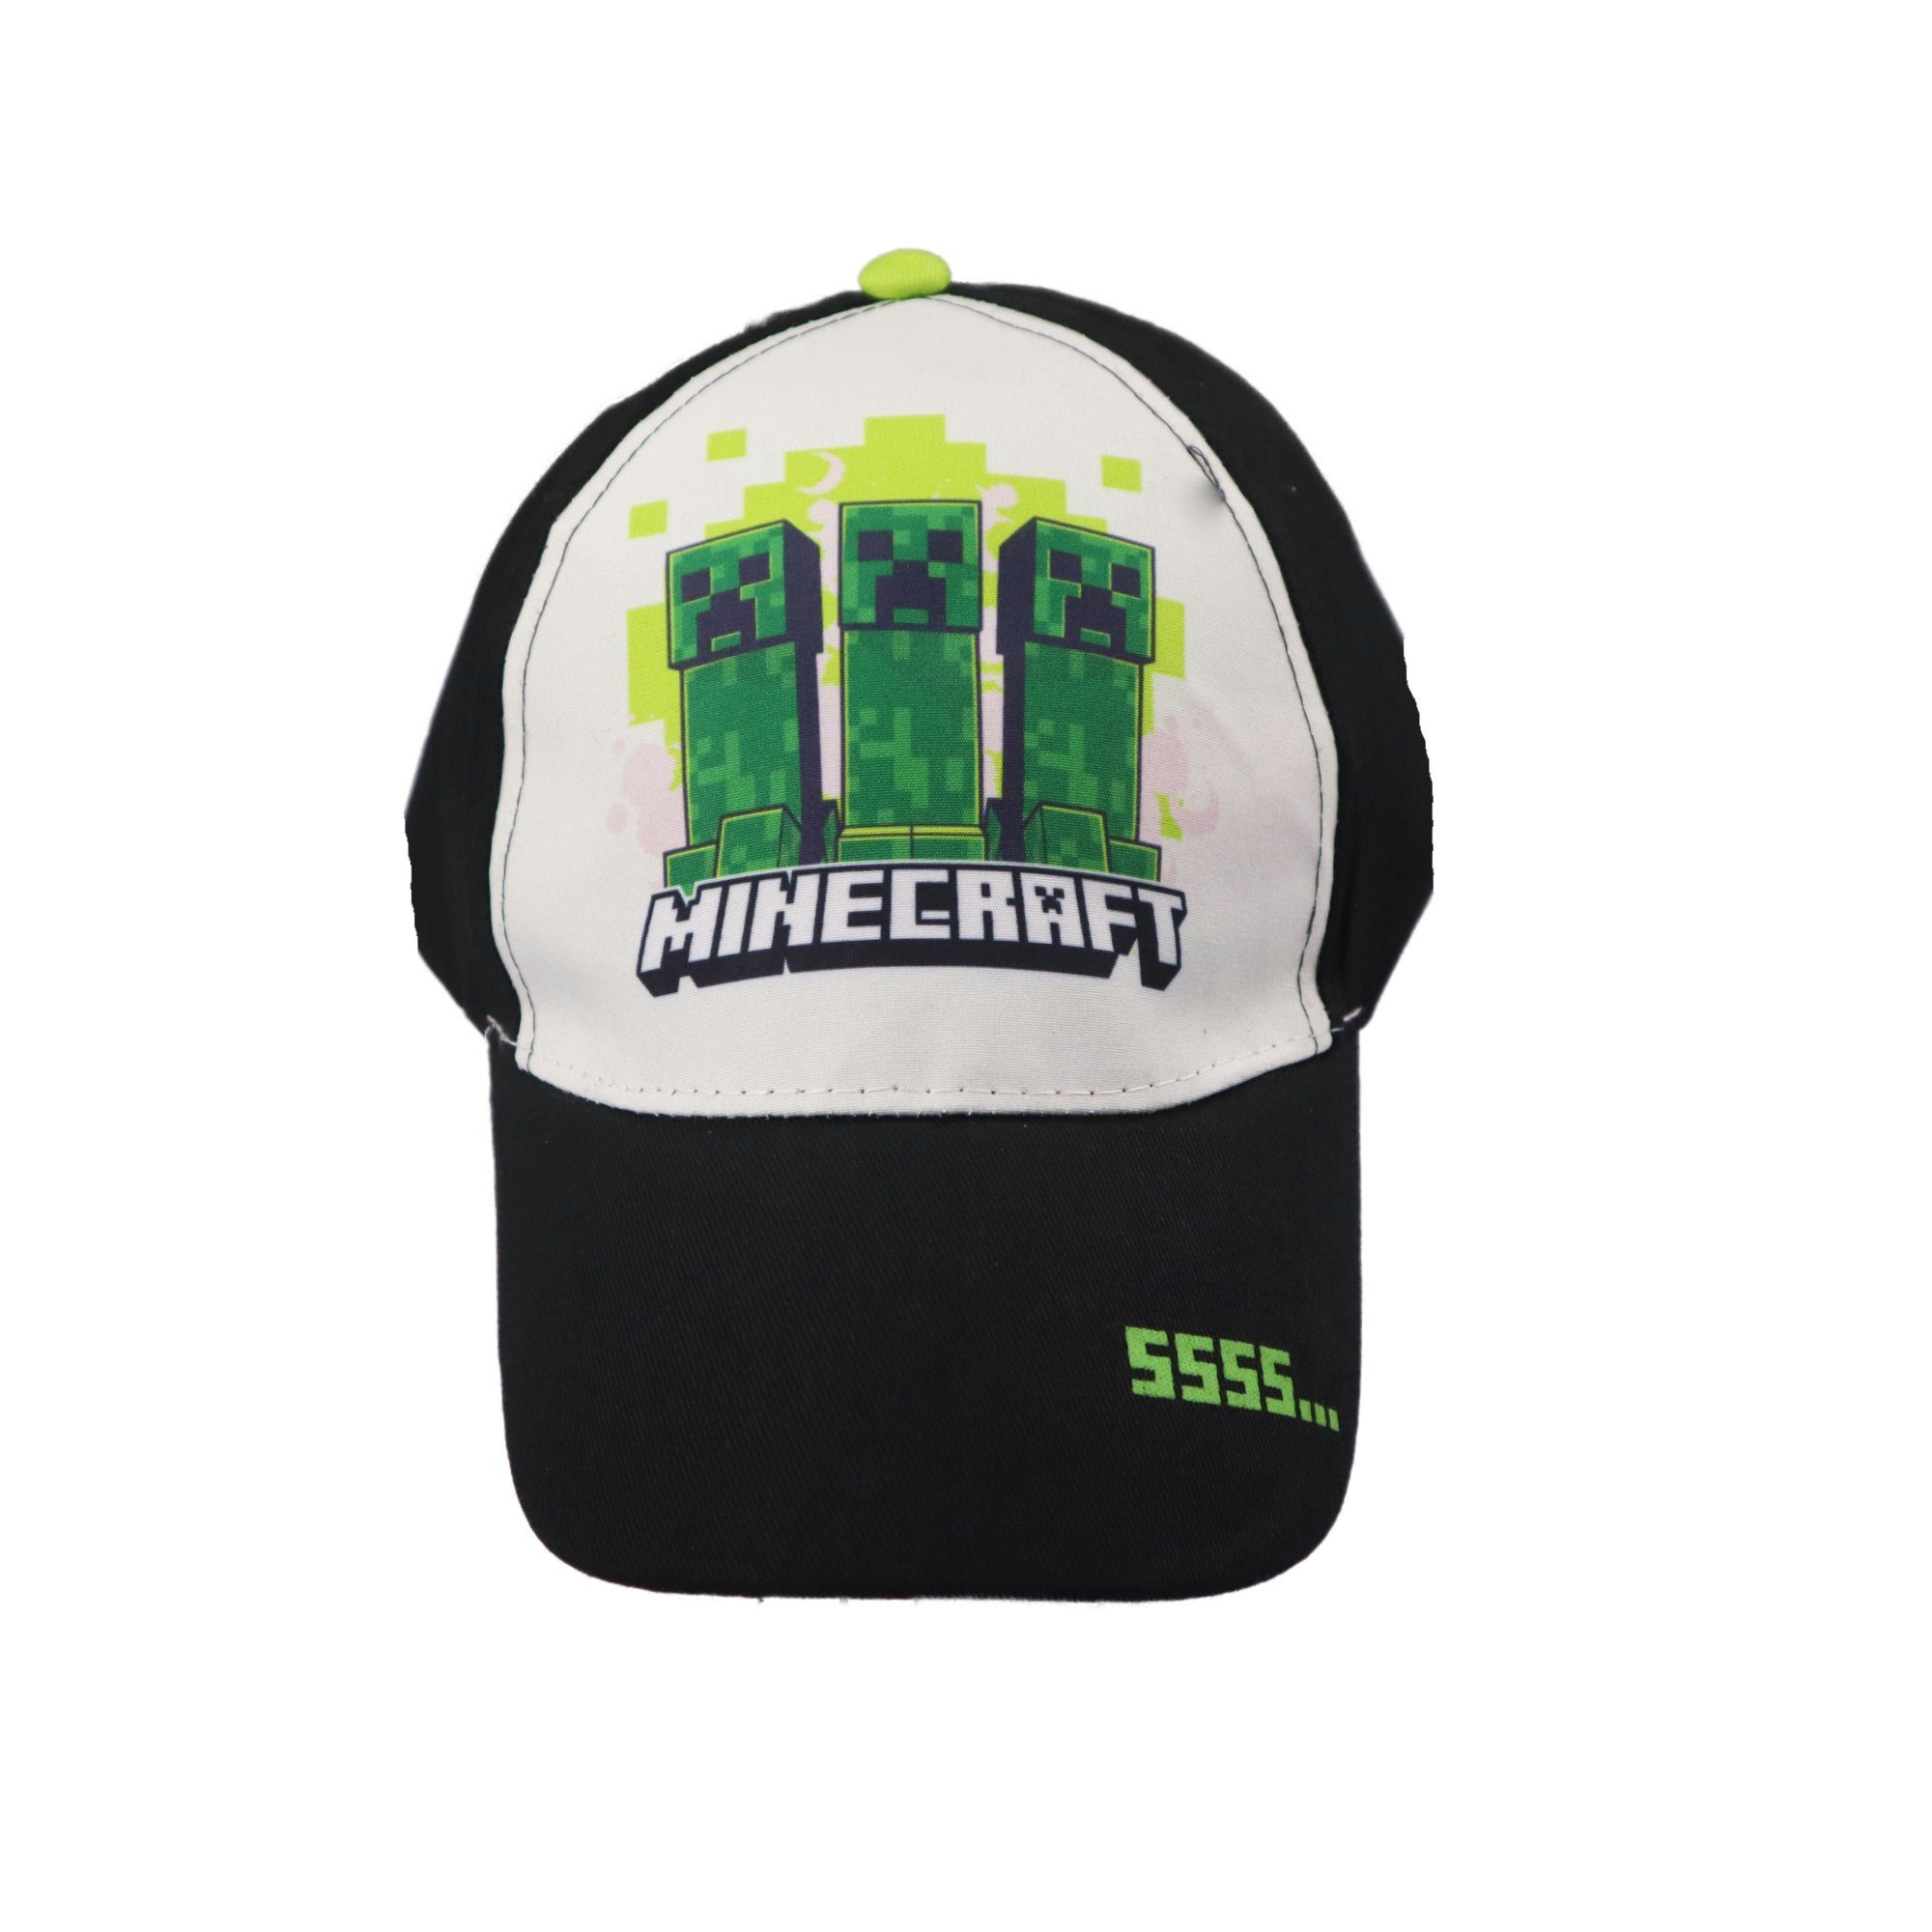 Gr. Minecraft Creeper Minecraft Cap Kappe 54 56 Basecap Baseball Kinder für bis